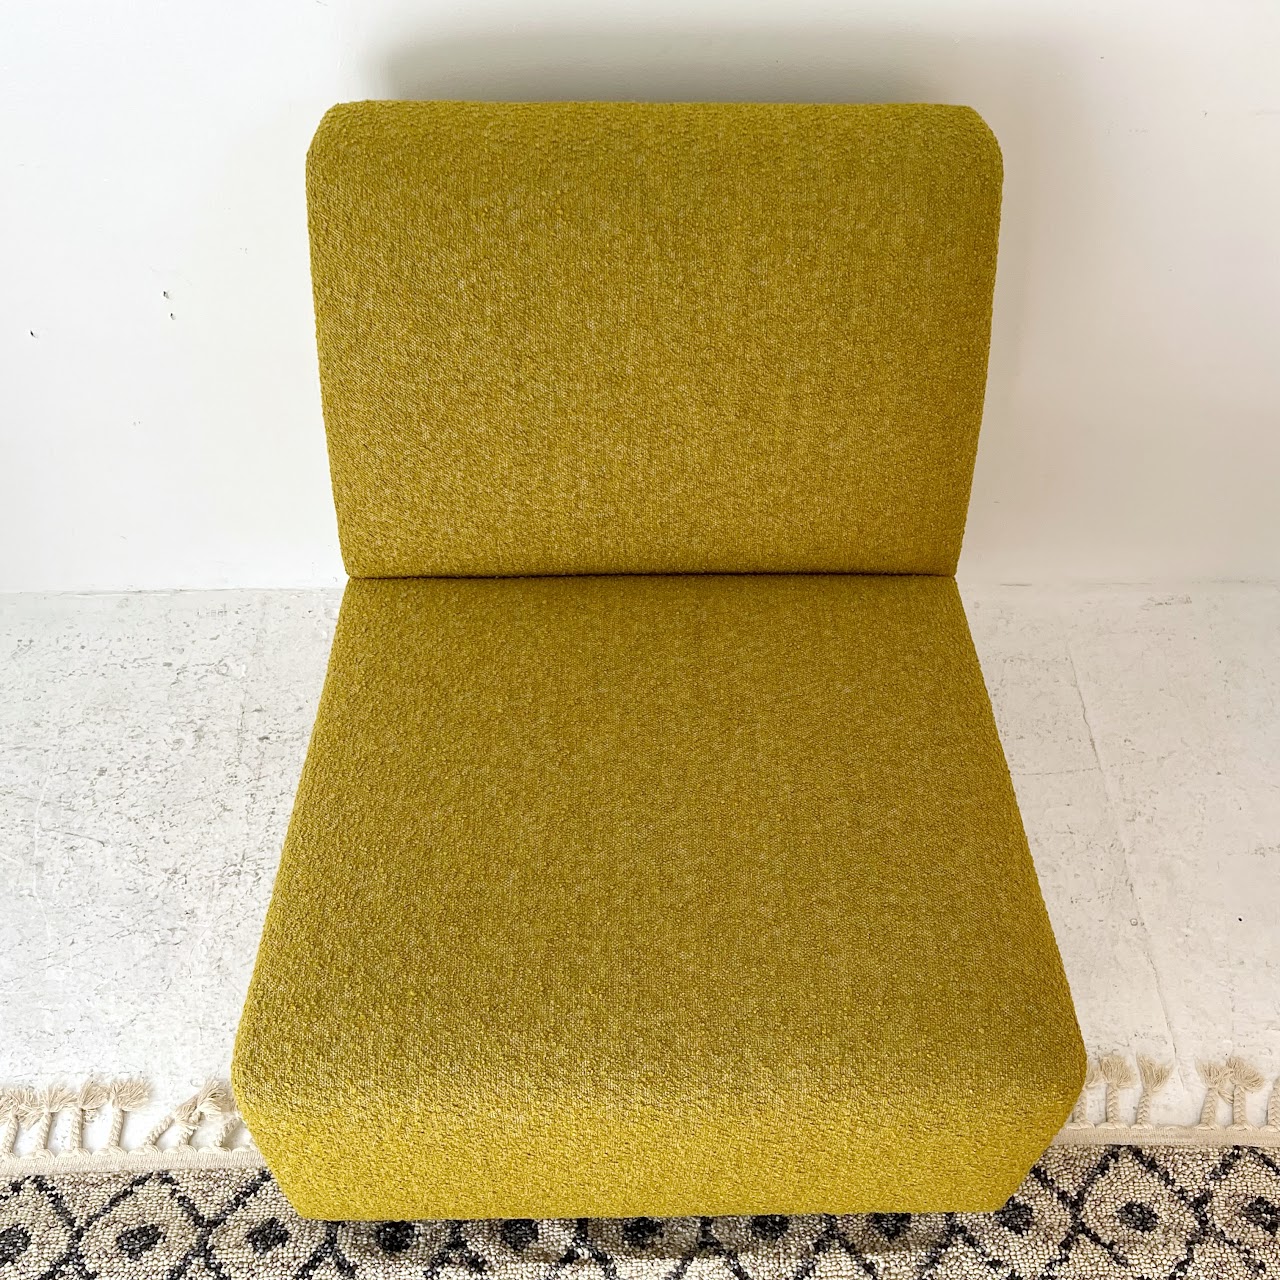 Bouclé Upholstered Contemporary Slipper Chair #2